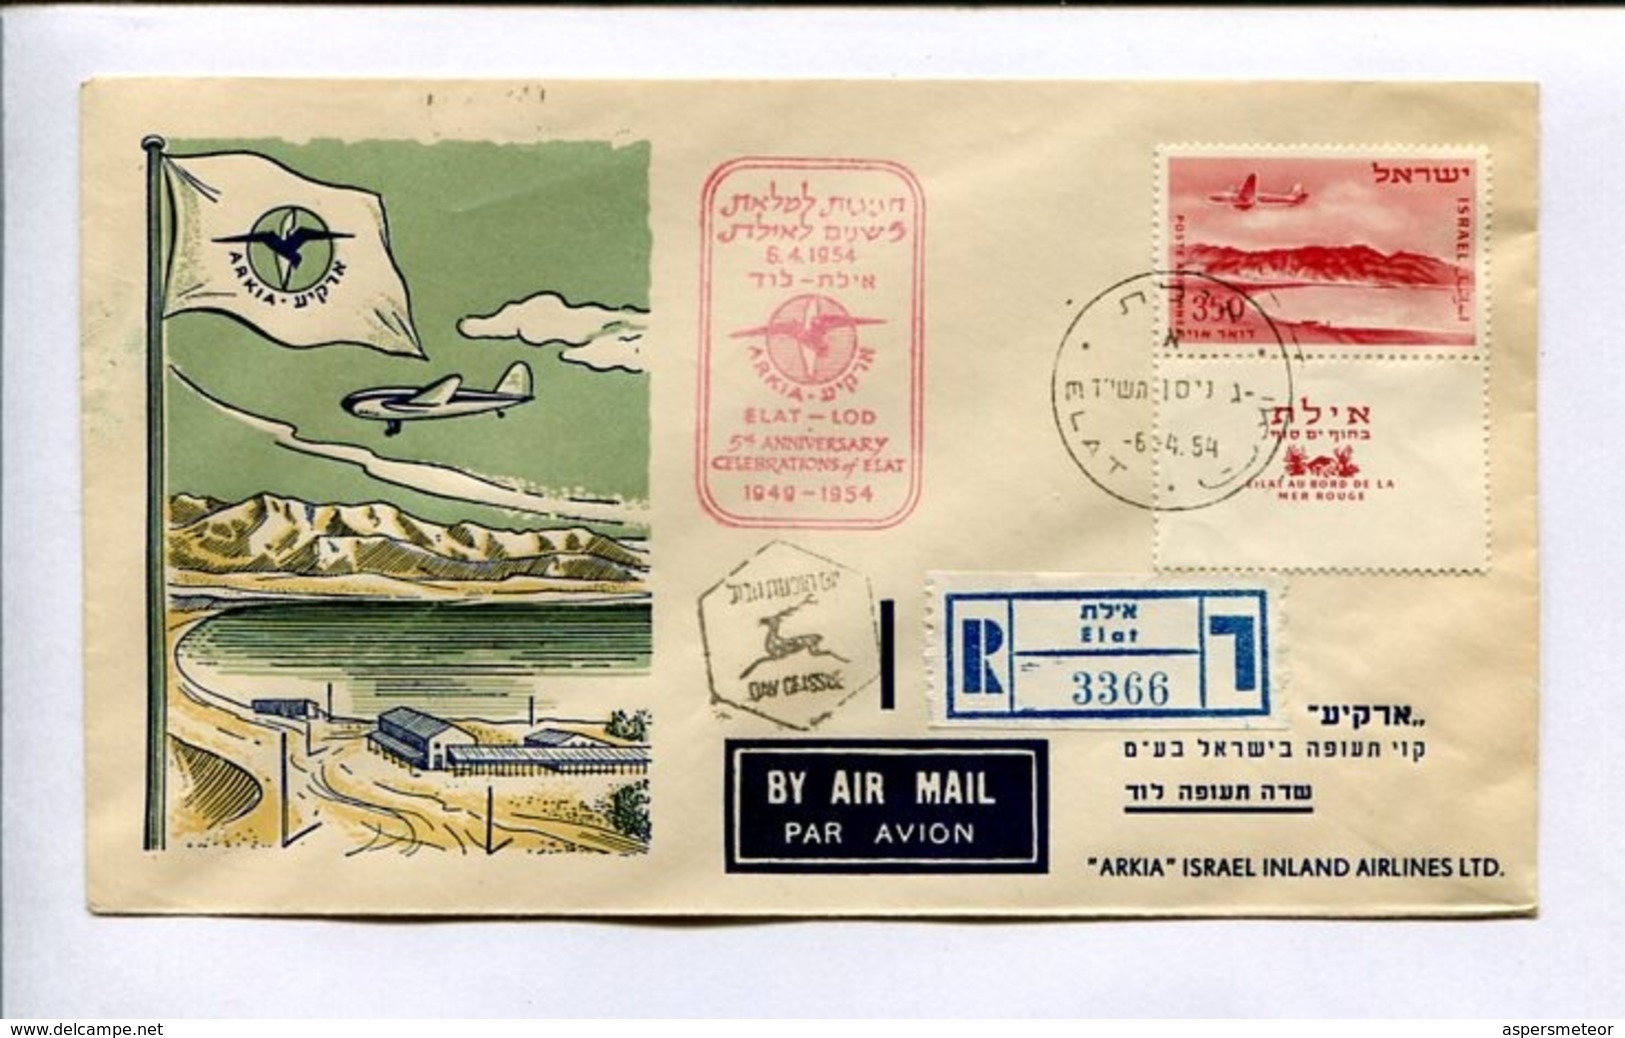 5th ANNIVERSARY CELEBRATION OF ELAT 1949-1954. ARKIA ELAT-LOD 6.4.1954 - ISRAEL AIR MAIL REGISTRED FLIGHT -LILHU - Posta Aerea